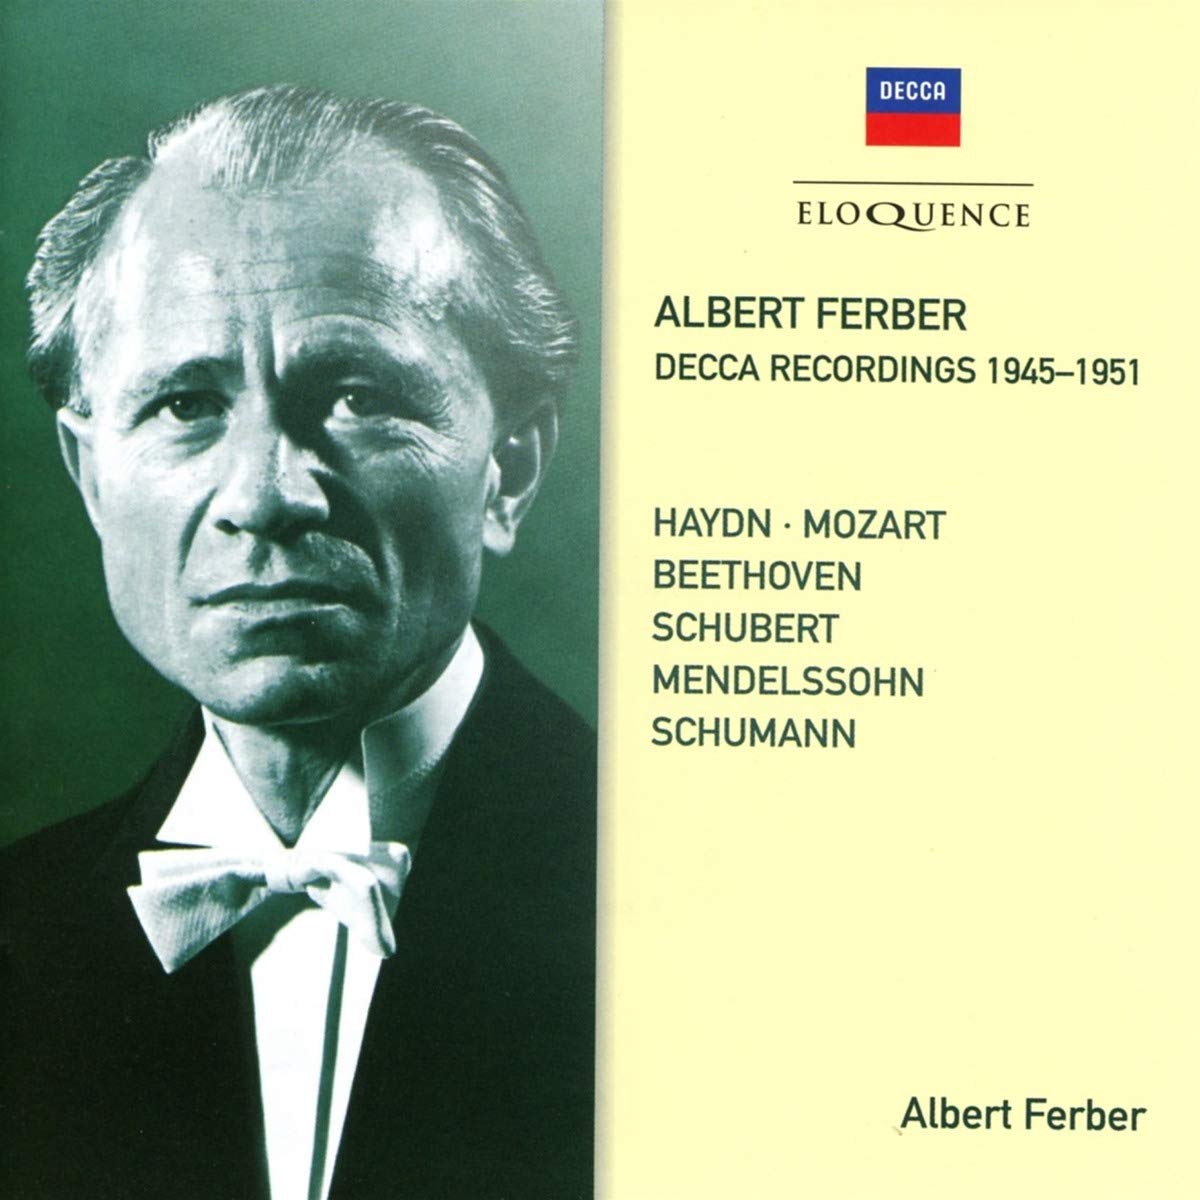 ALBERT FERBER: DECCA RECORDINGS 1946-1951